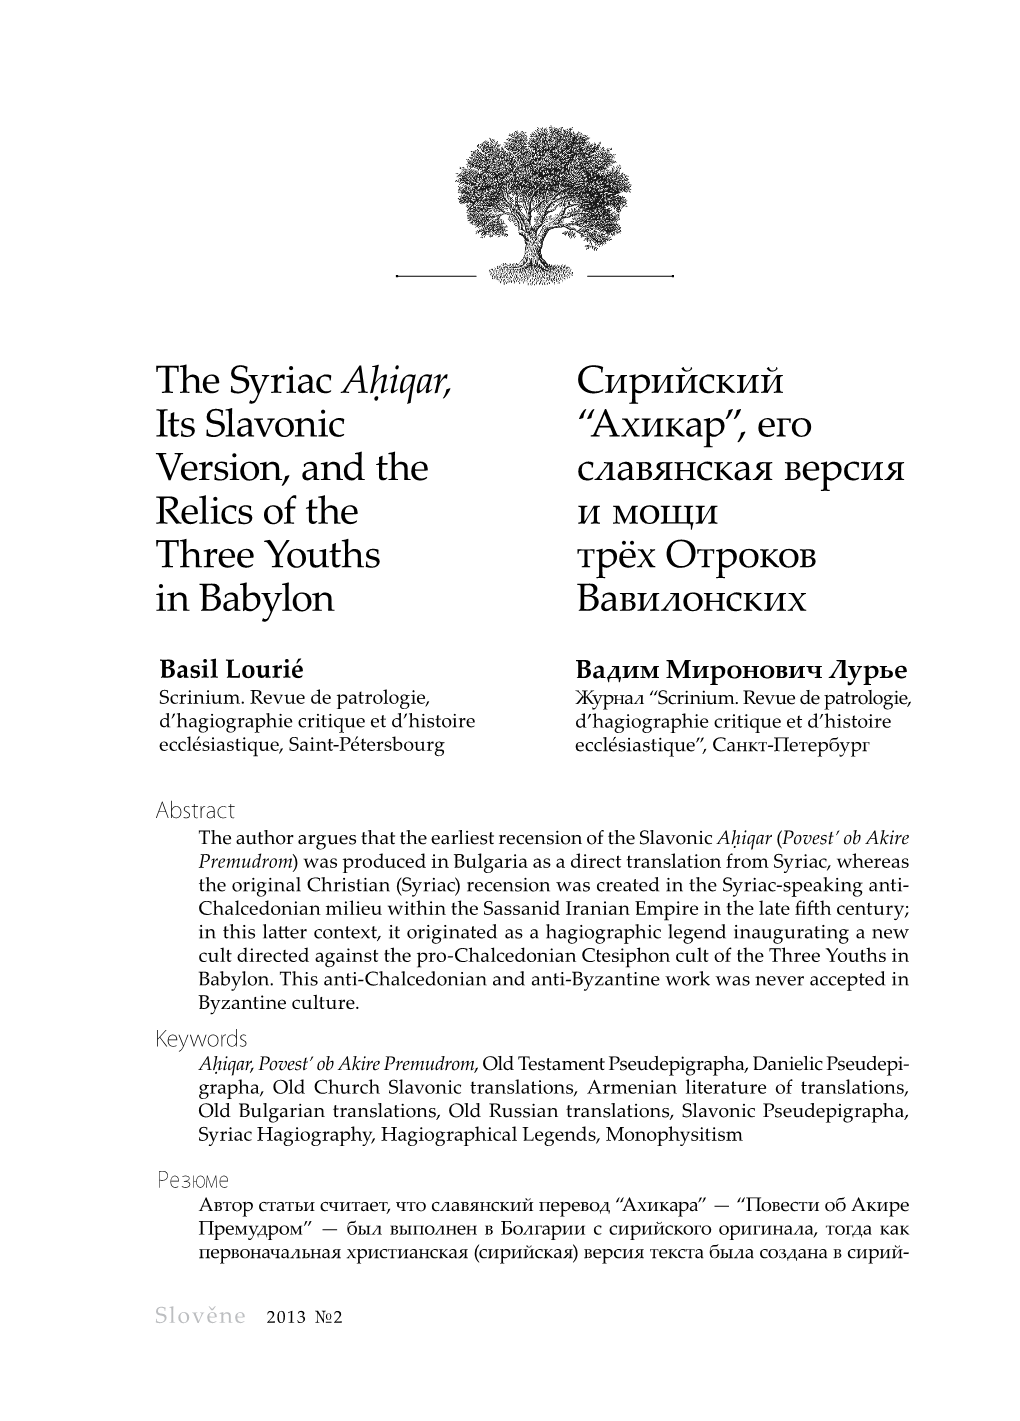 Slověne. Vol. 2. No. 2. the Syriac Aḥiqar, Its Slavonic Version, And